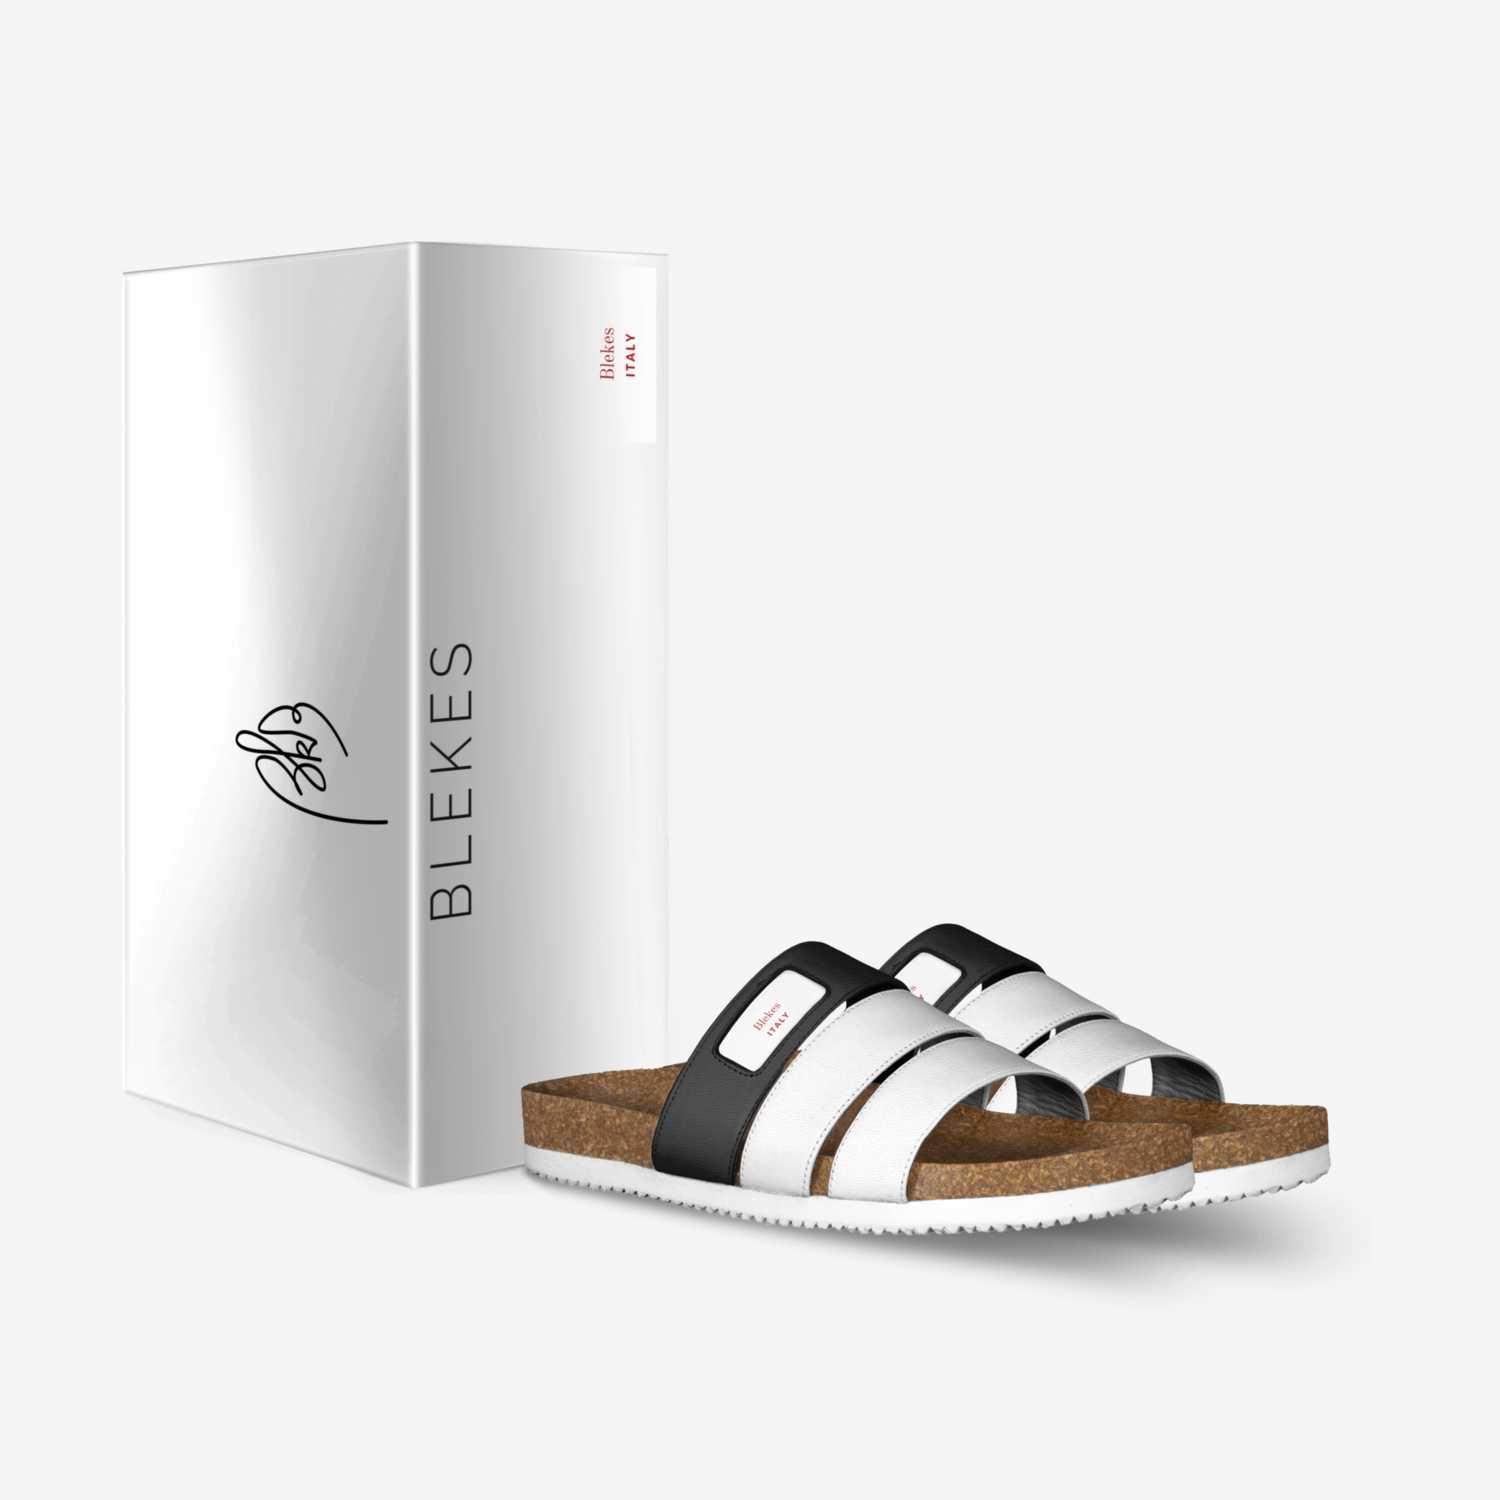 blekes custom made in Italy shoes by Jr Blekes | Box view